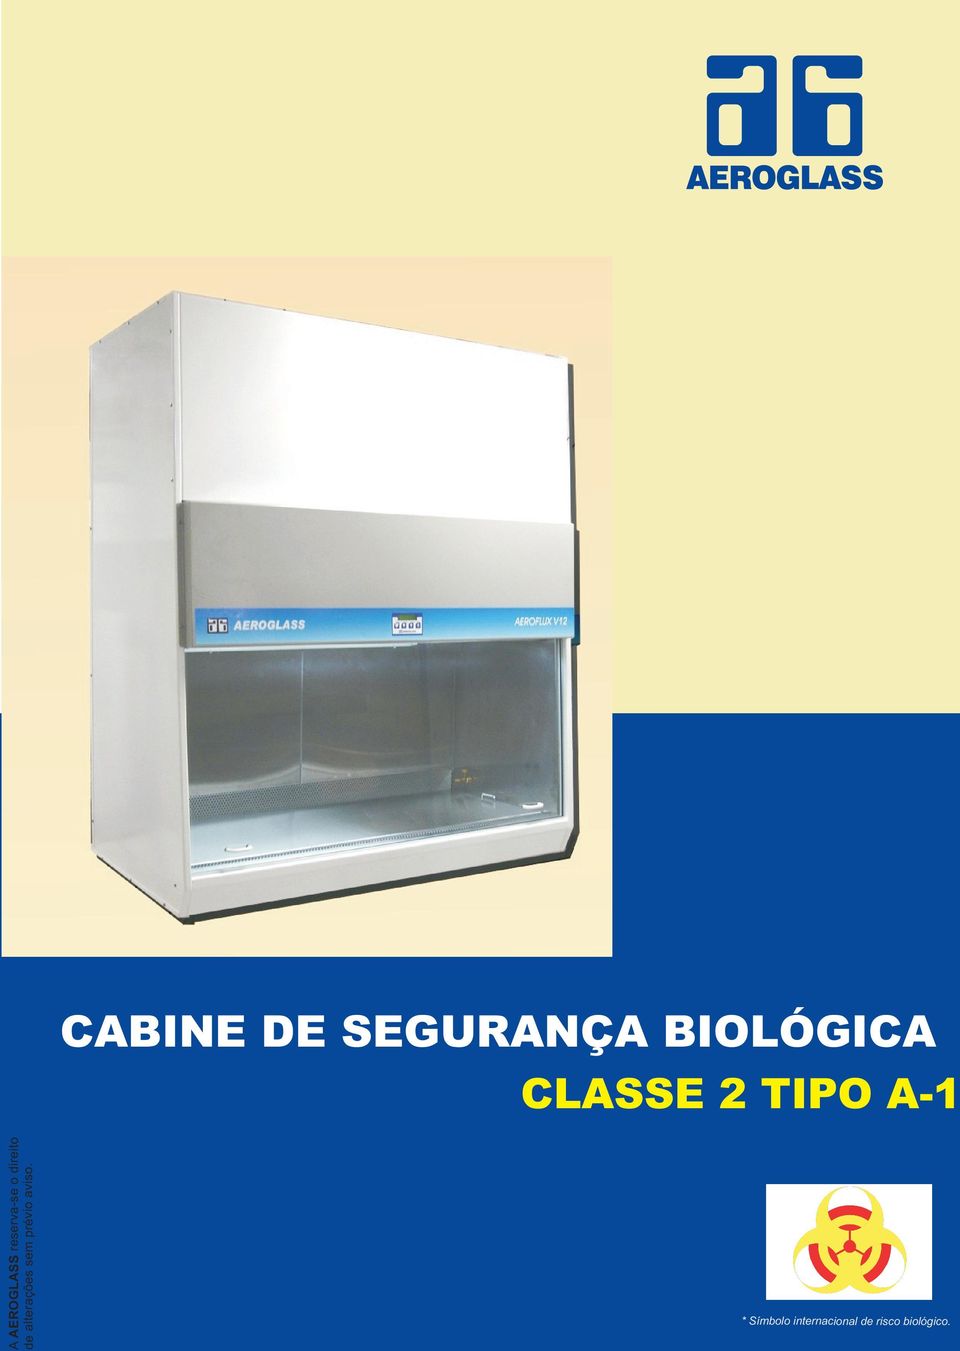 CABINE DE SEGURANÇA BIOLÓGICA CLASSE 2